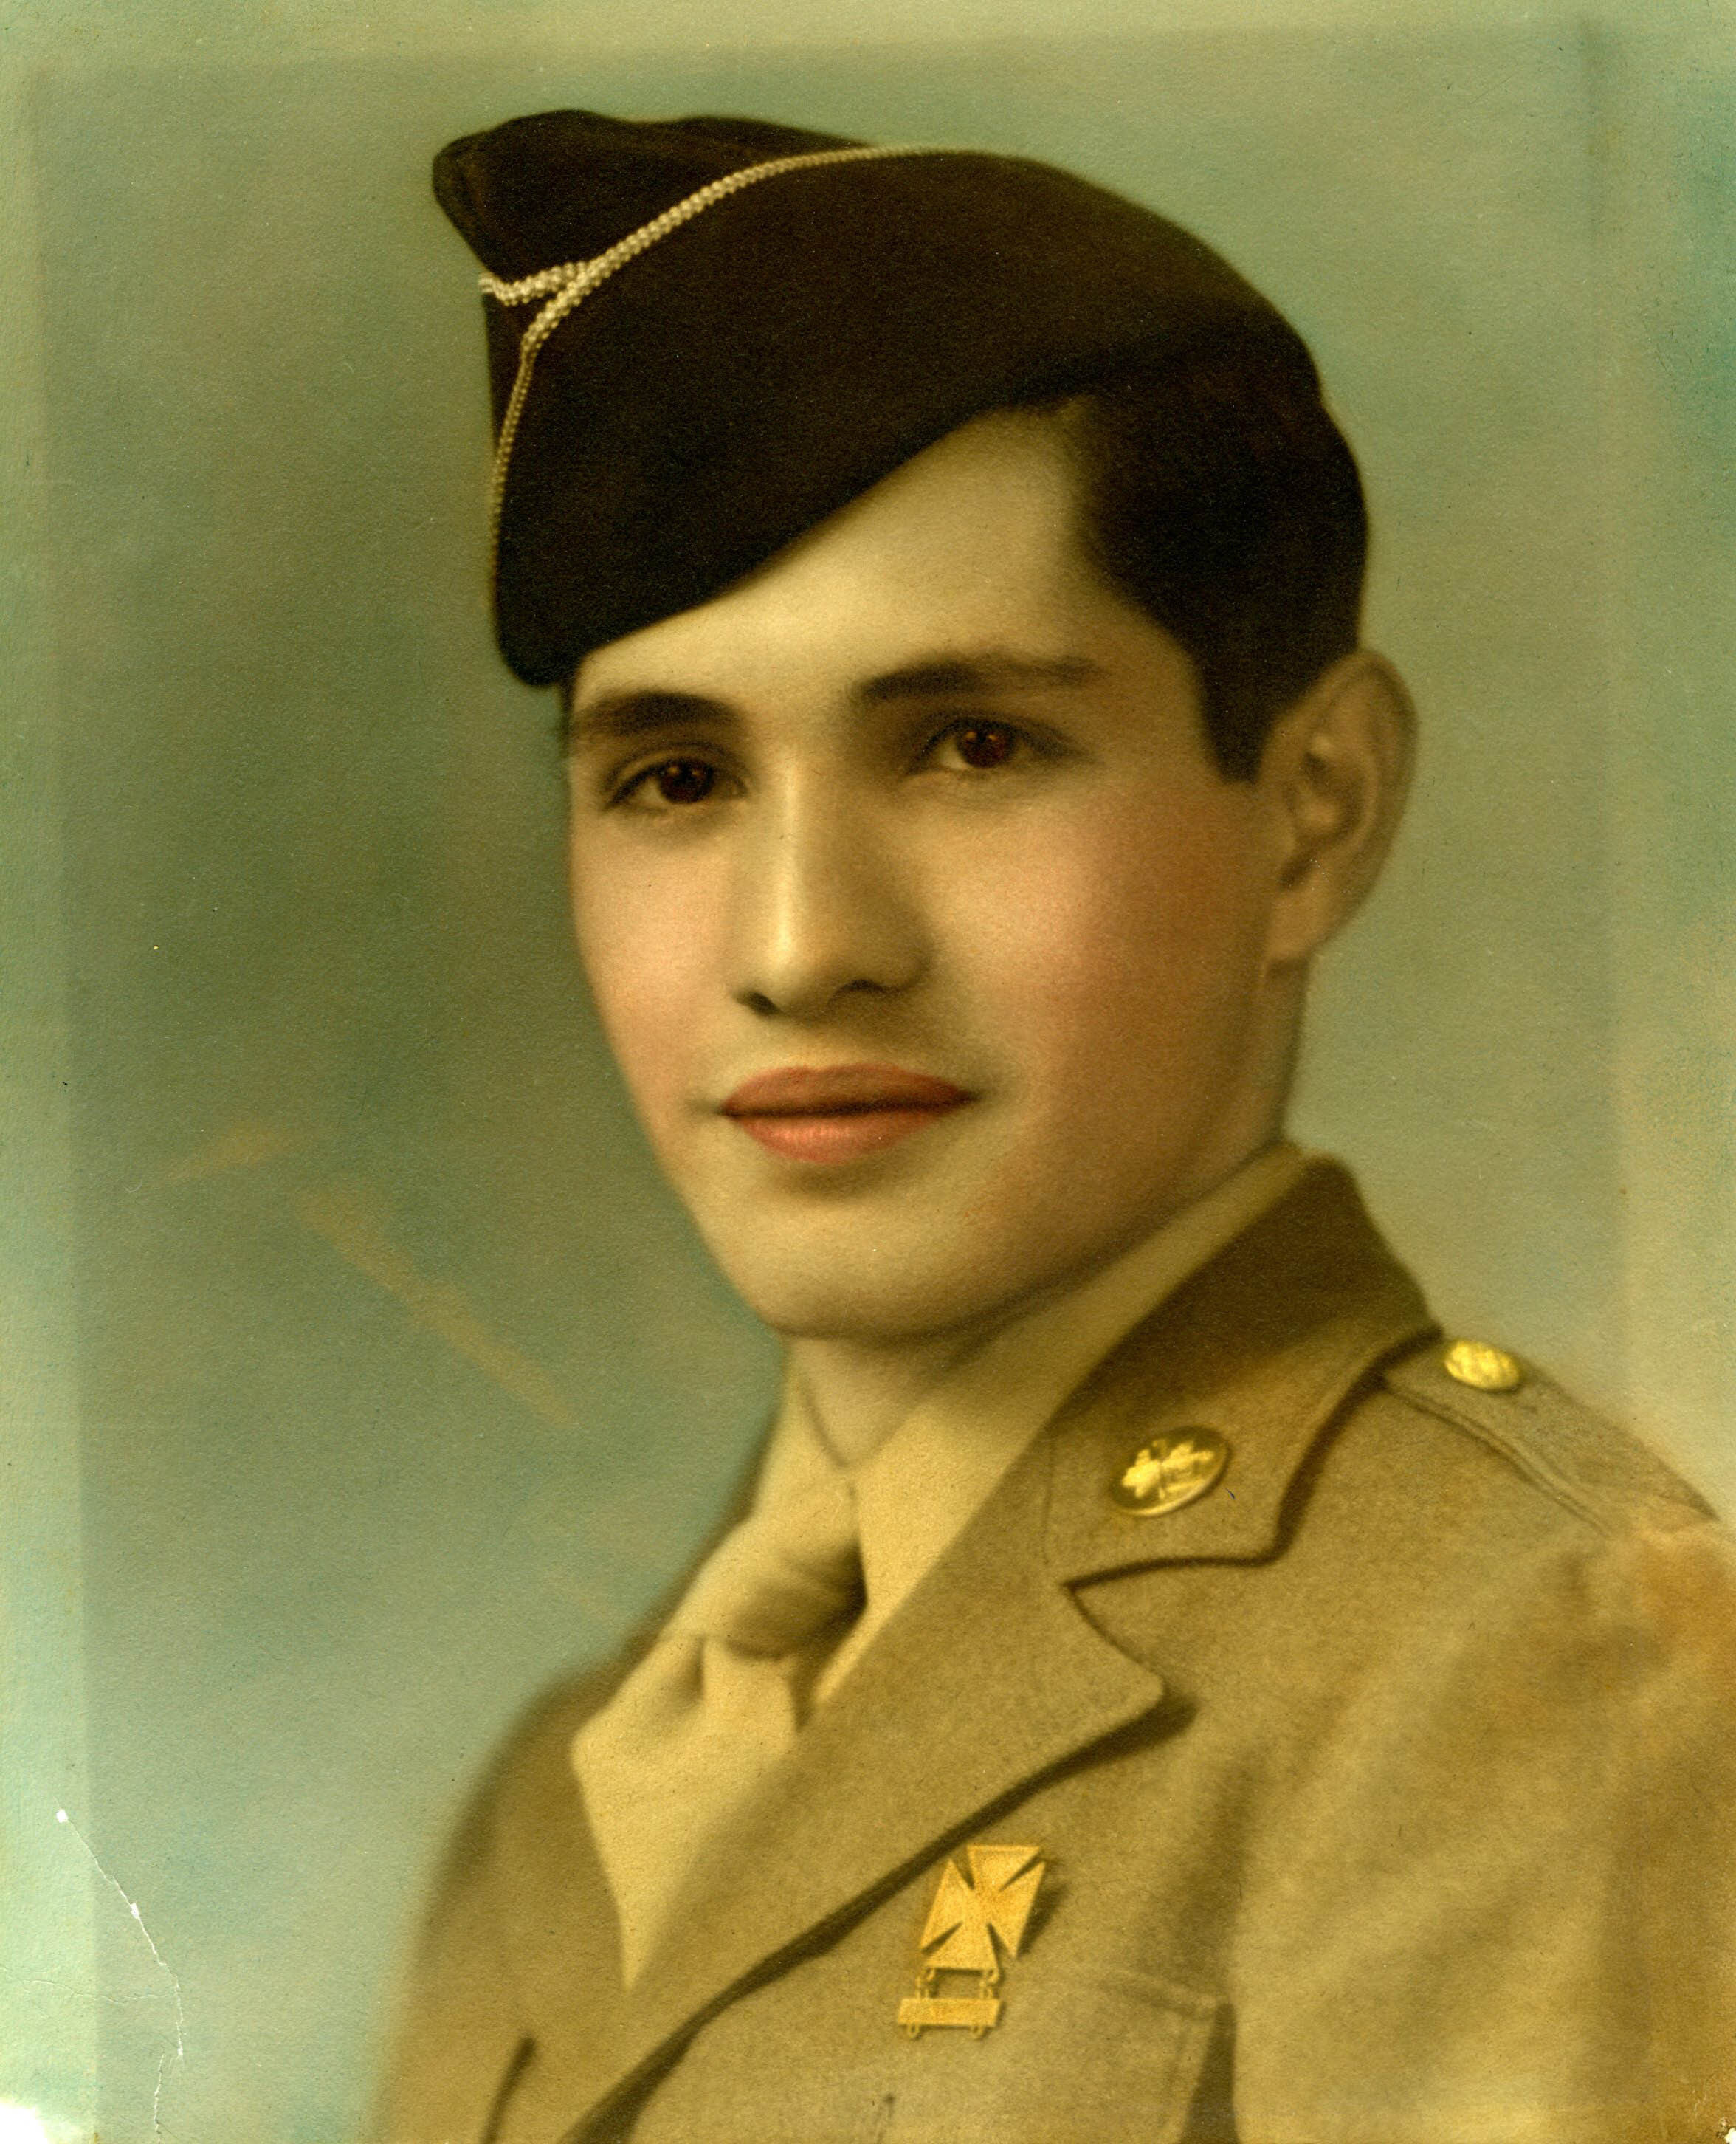 Sarria during World War II service